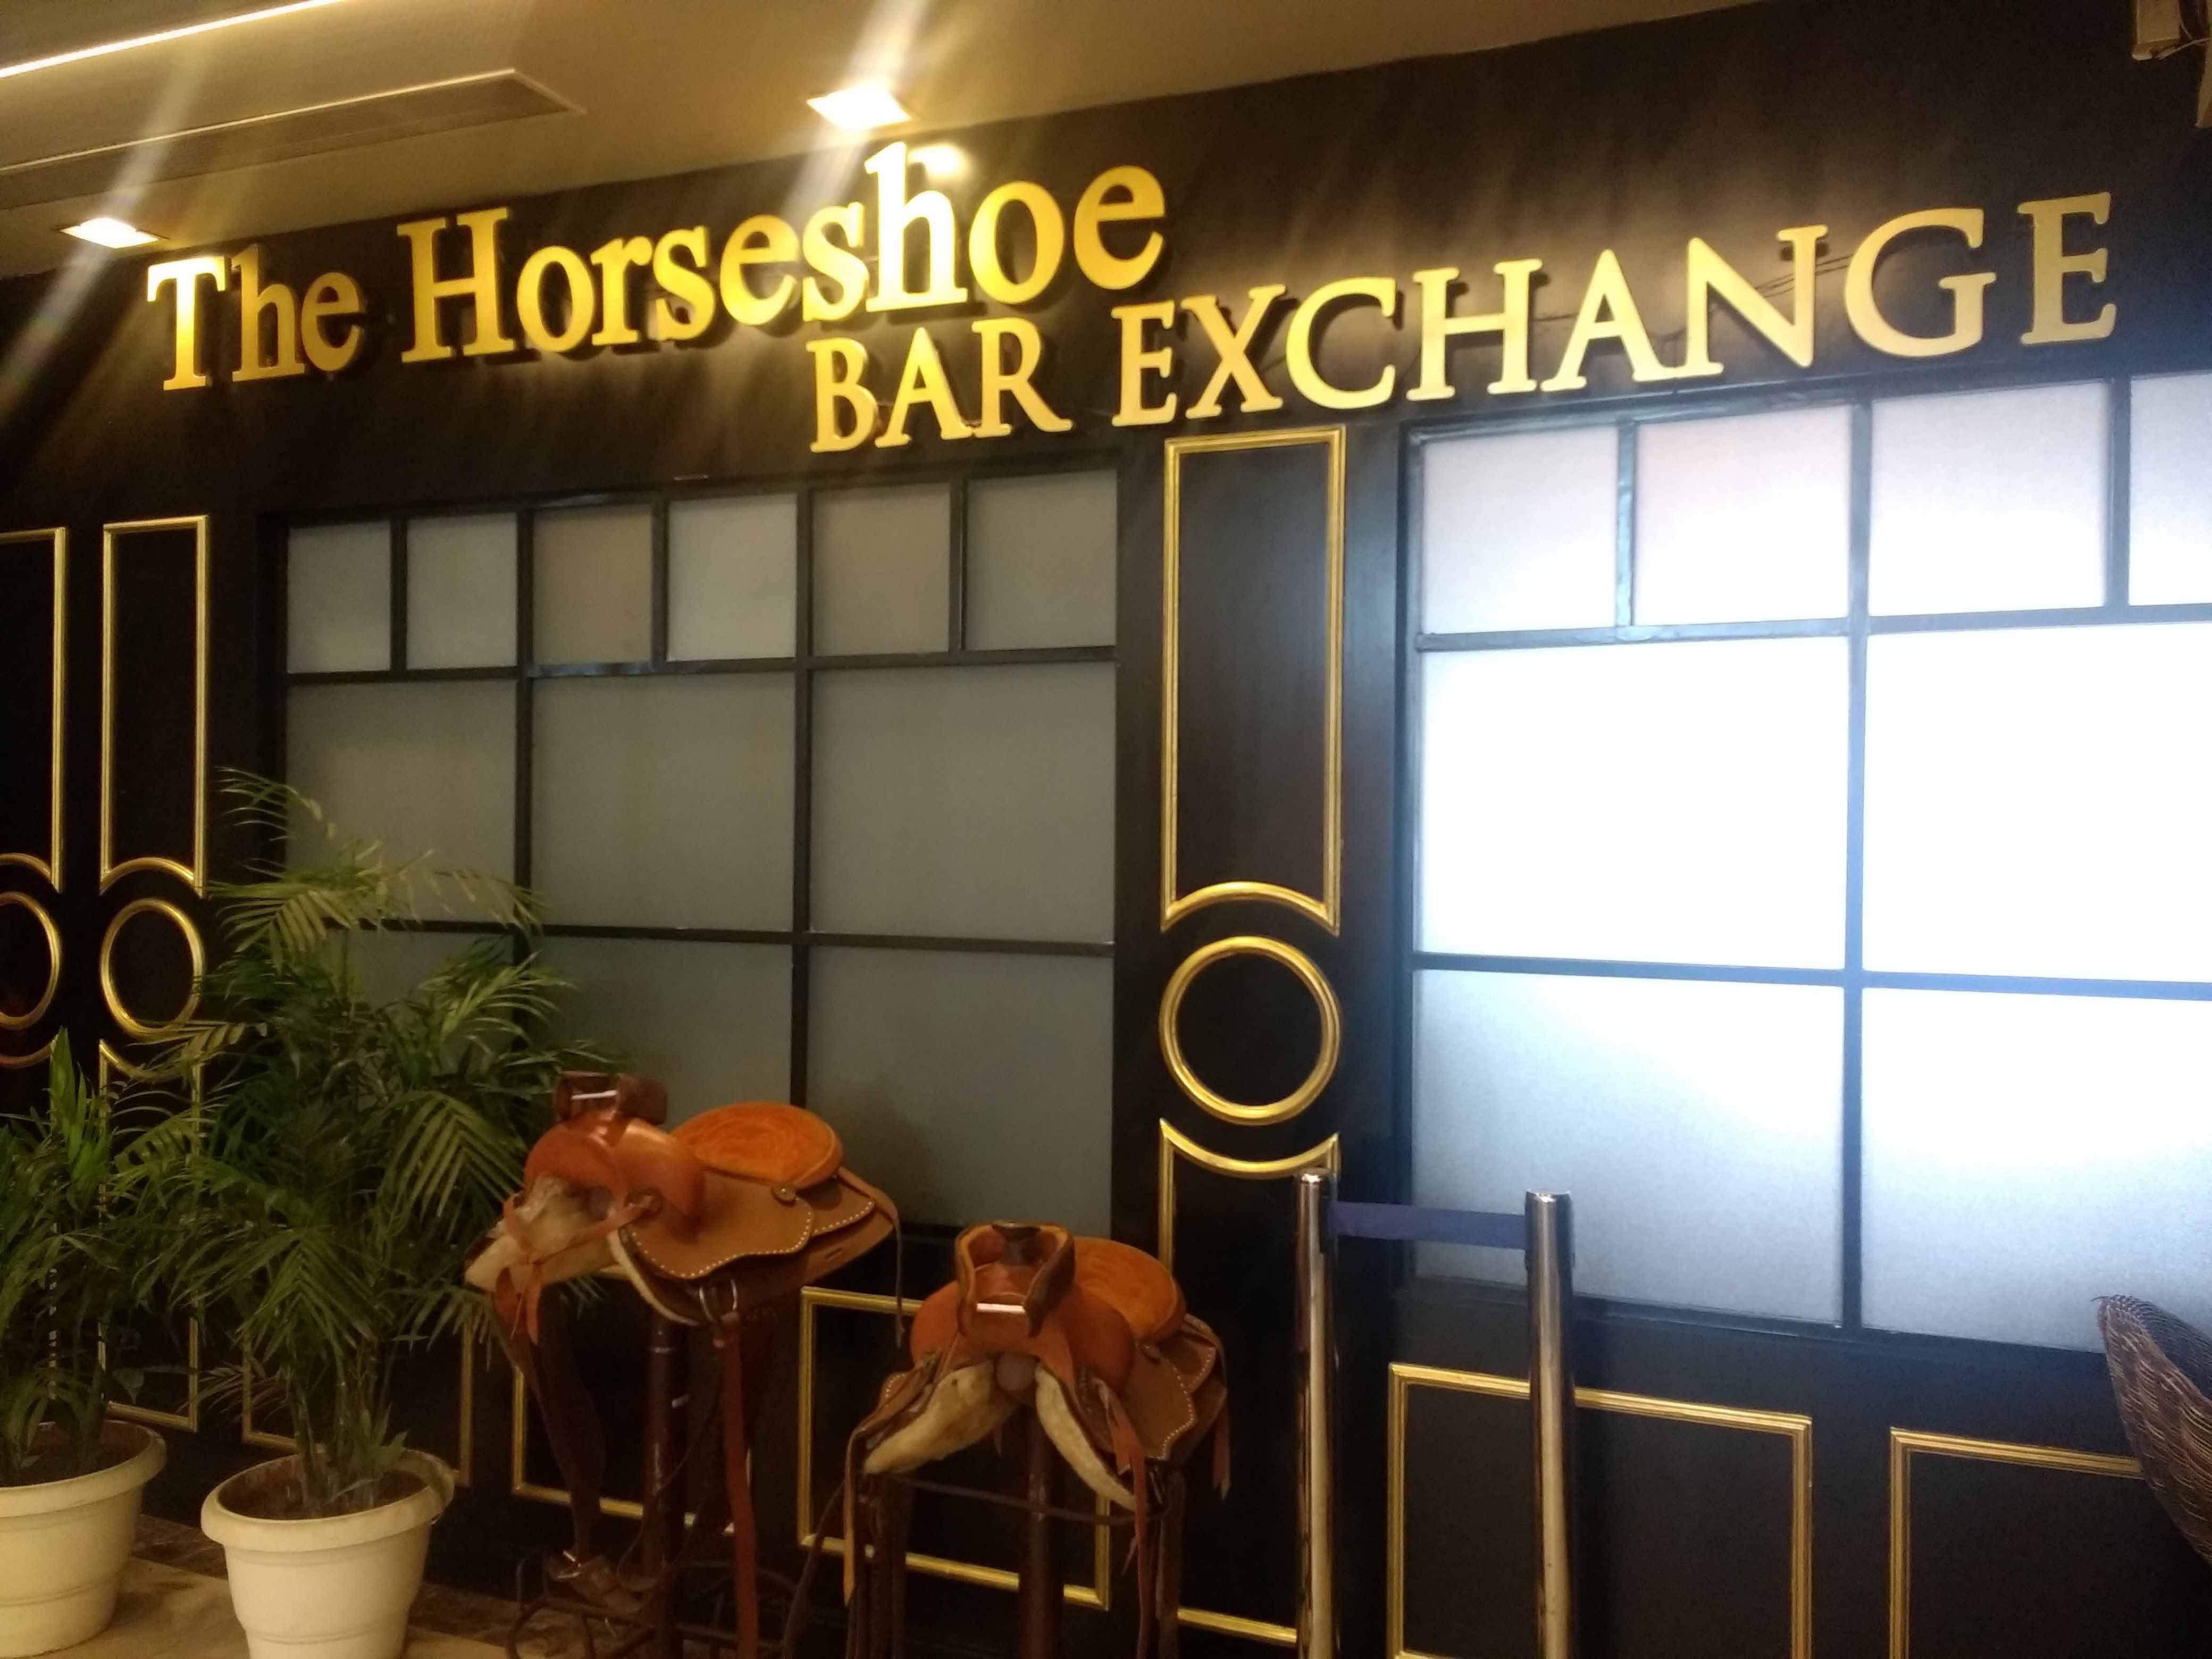 The Horseshoe Bar Exchange in Chandigarh Industrial Area, Chandigarh